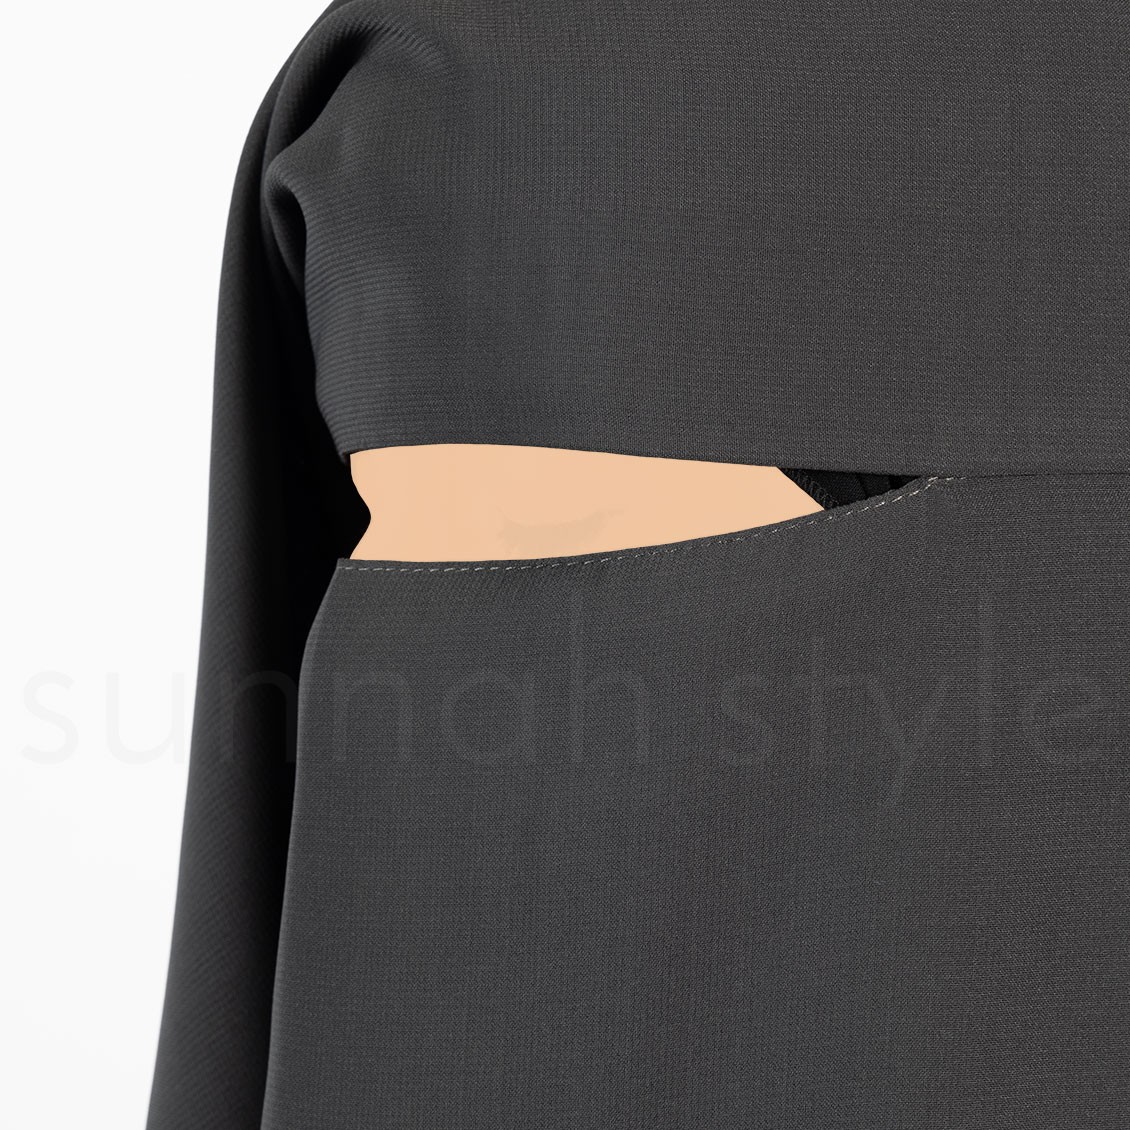 Sunnah Style Three Layer Niqab Dark Grey